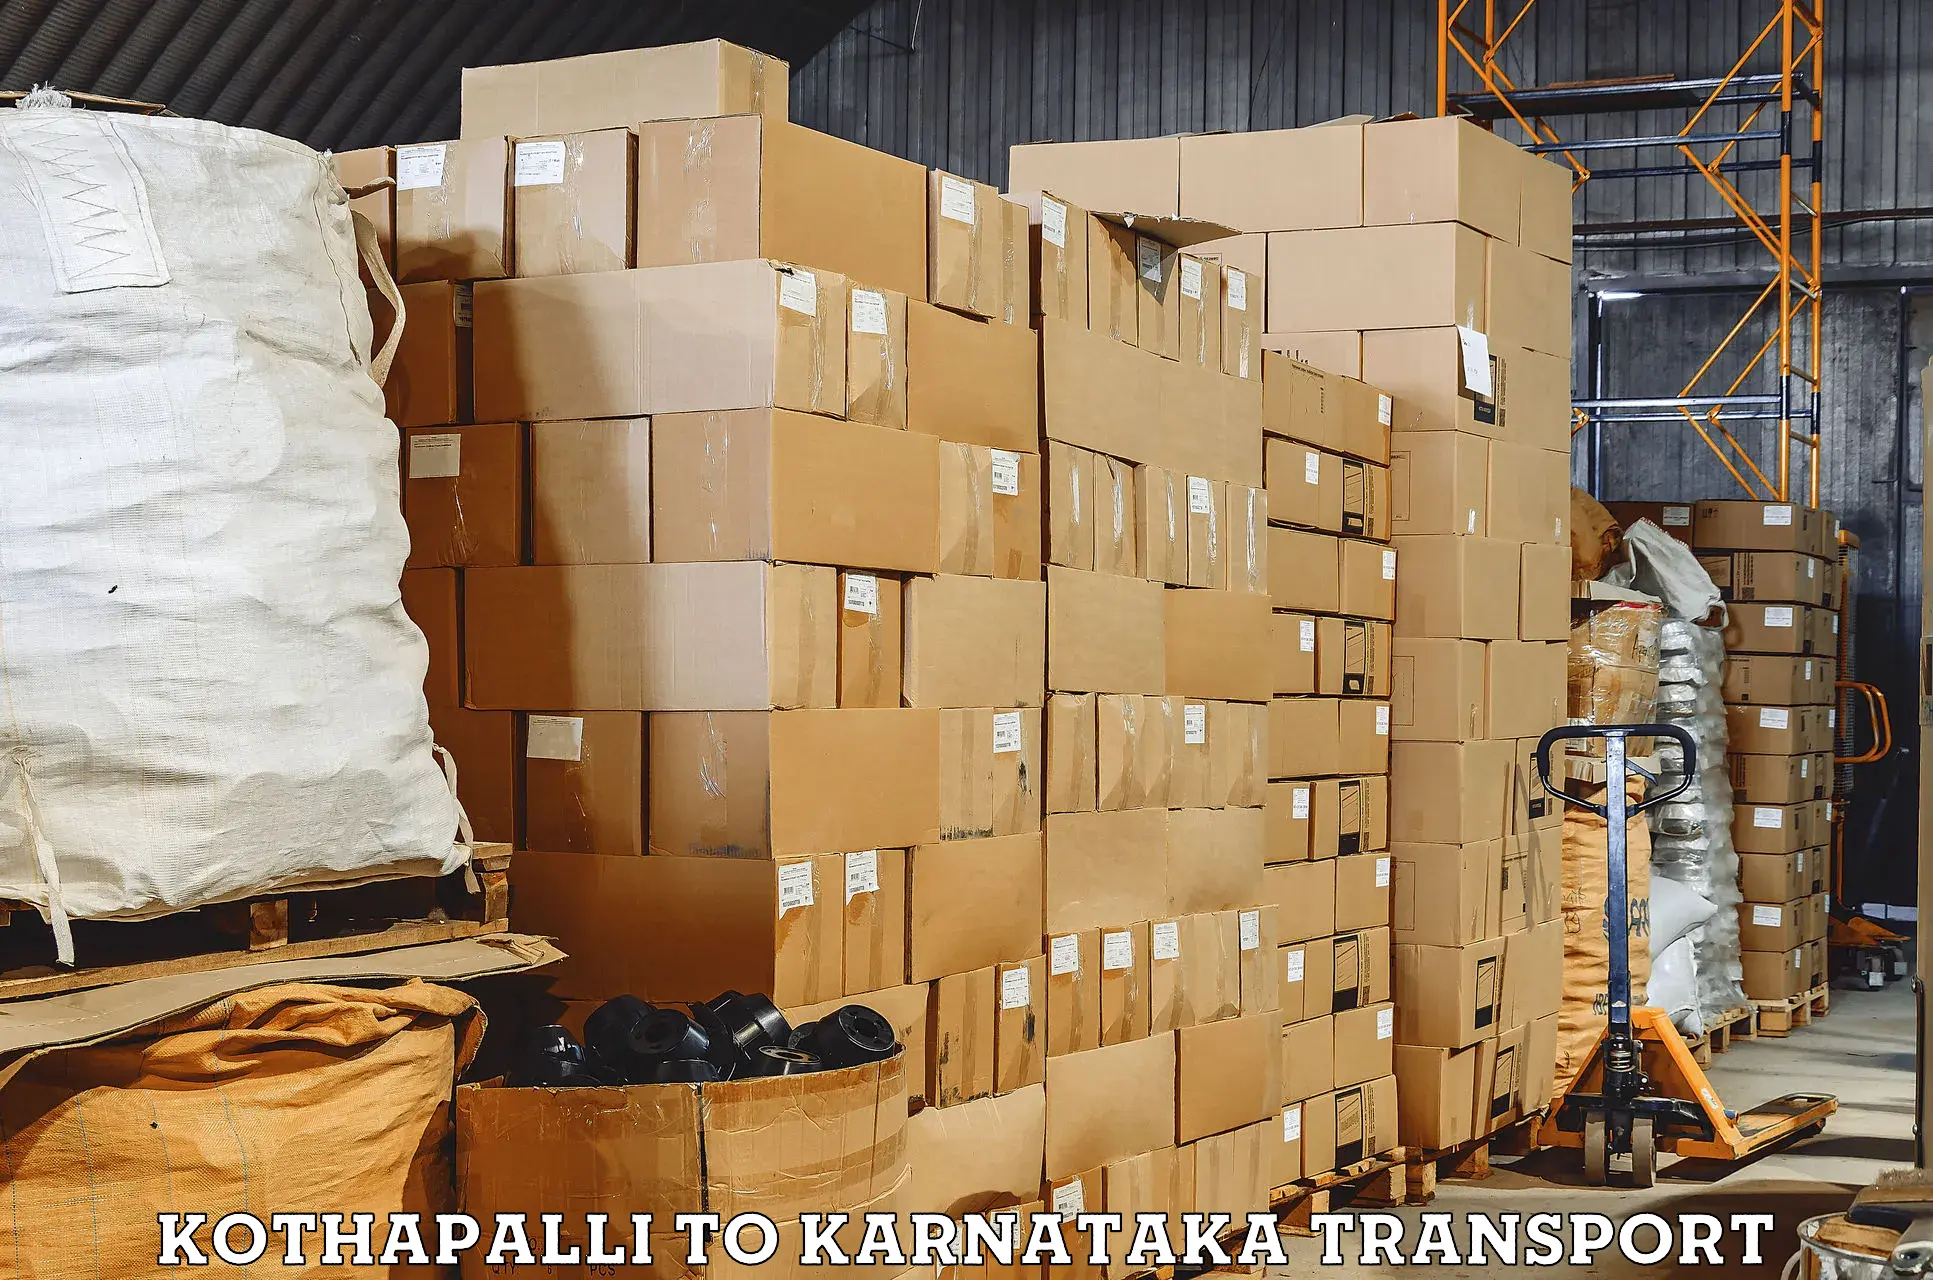 Shipping partner Kothapalli to Yellare